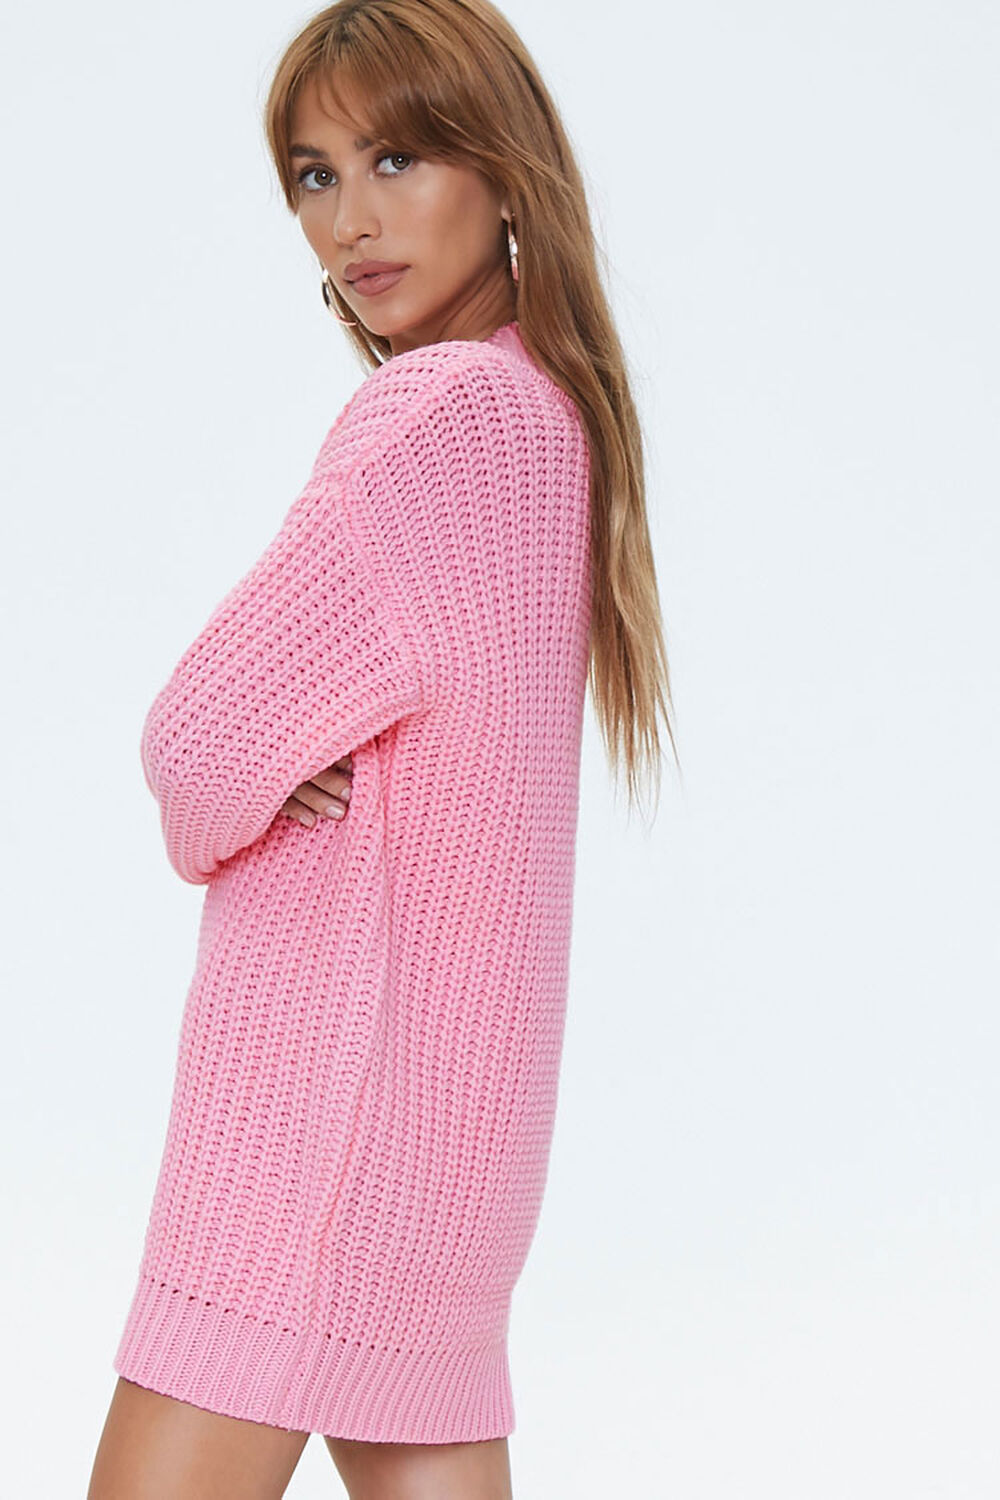 PINK Drop-Sleeve Sweater Dress, image 2